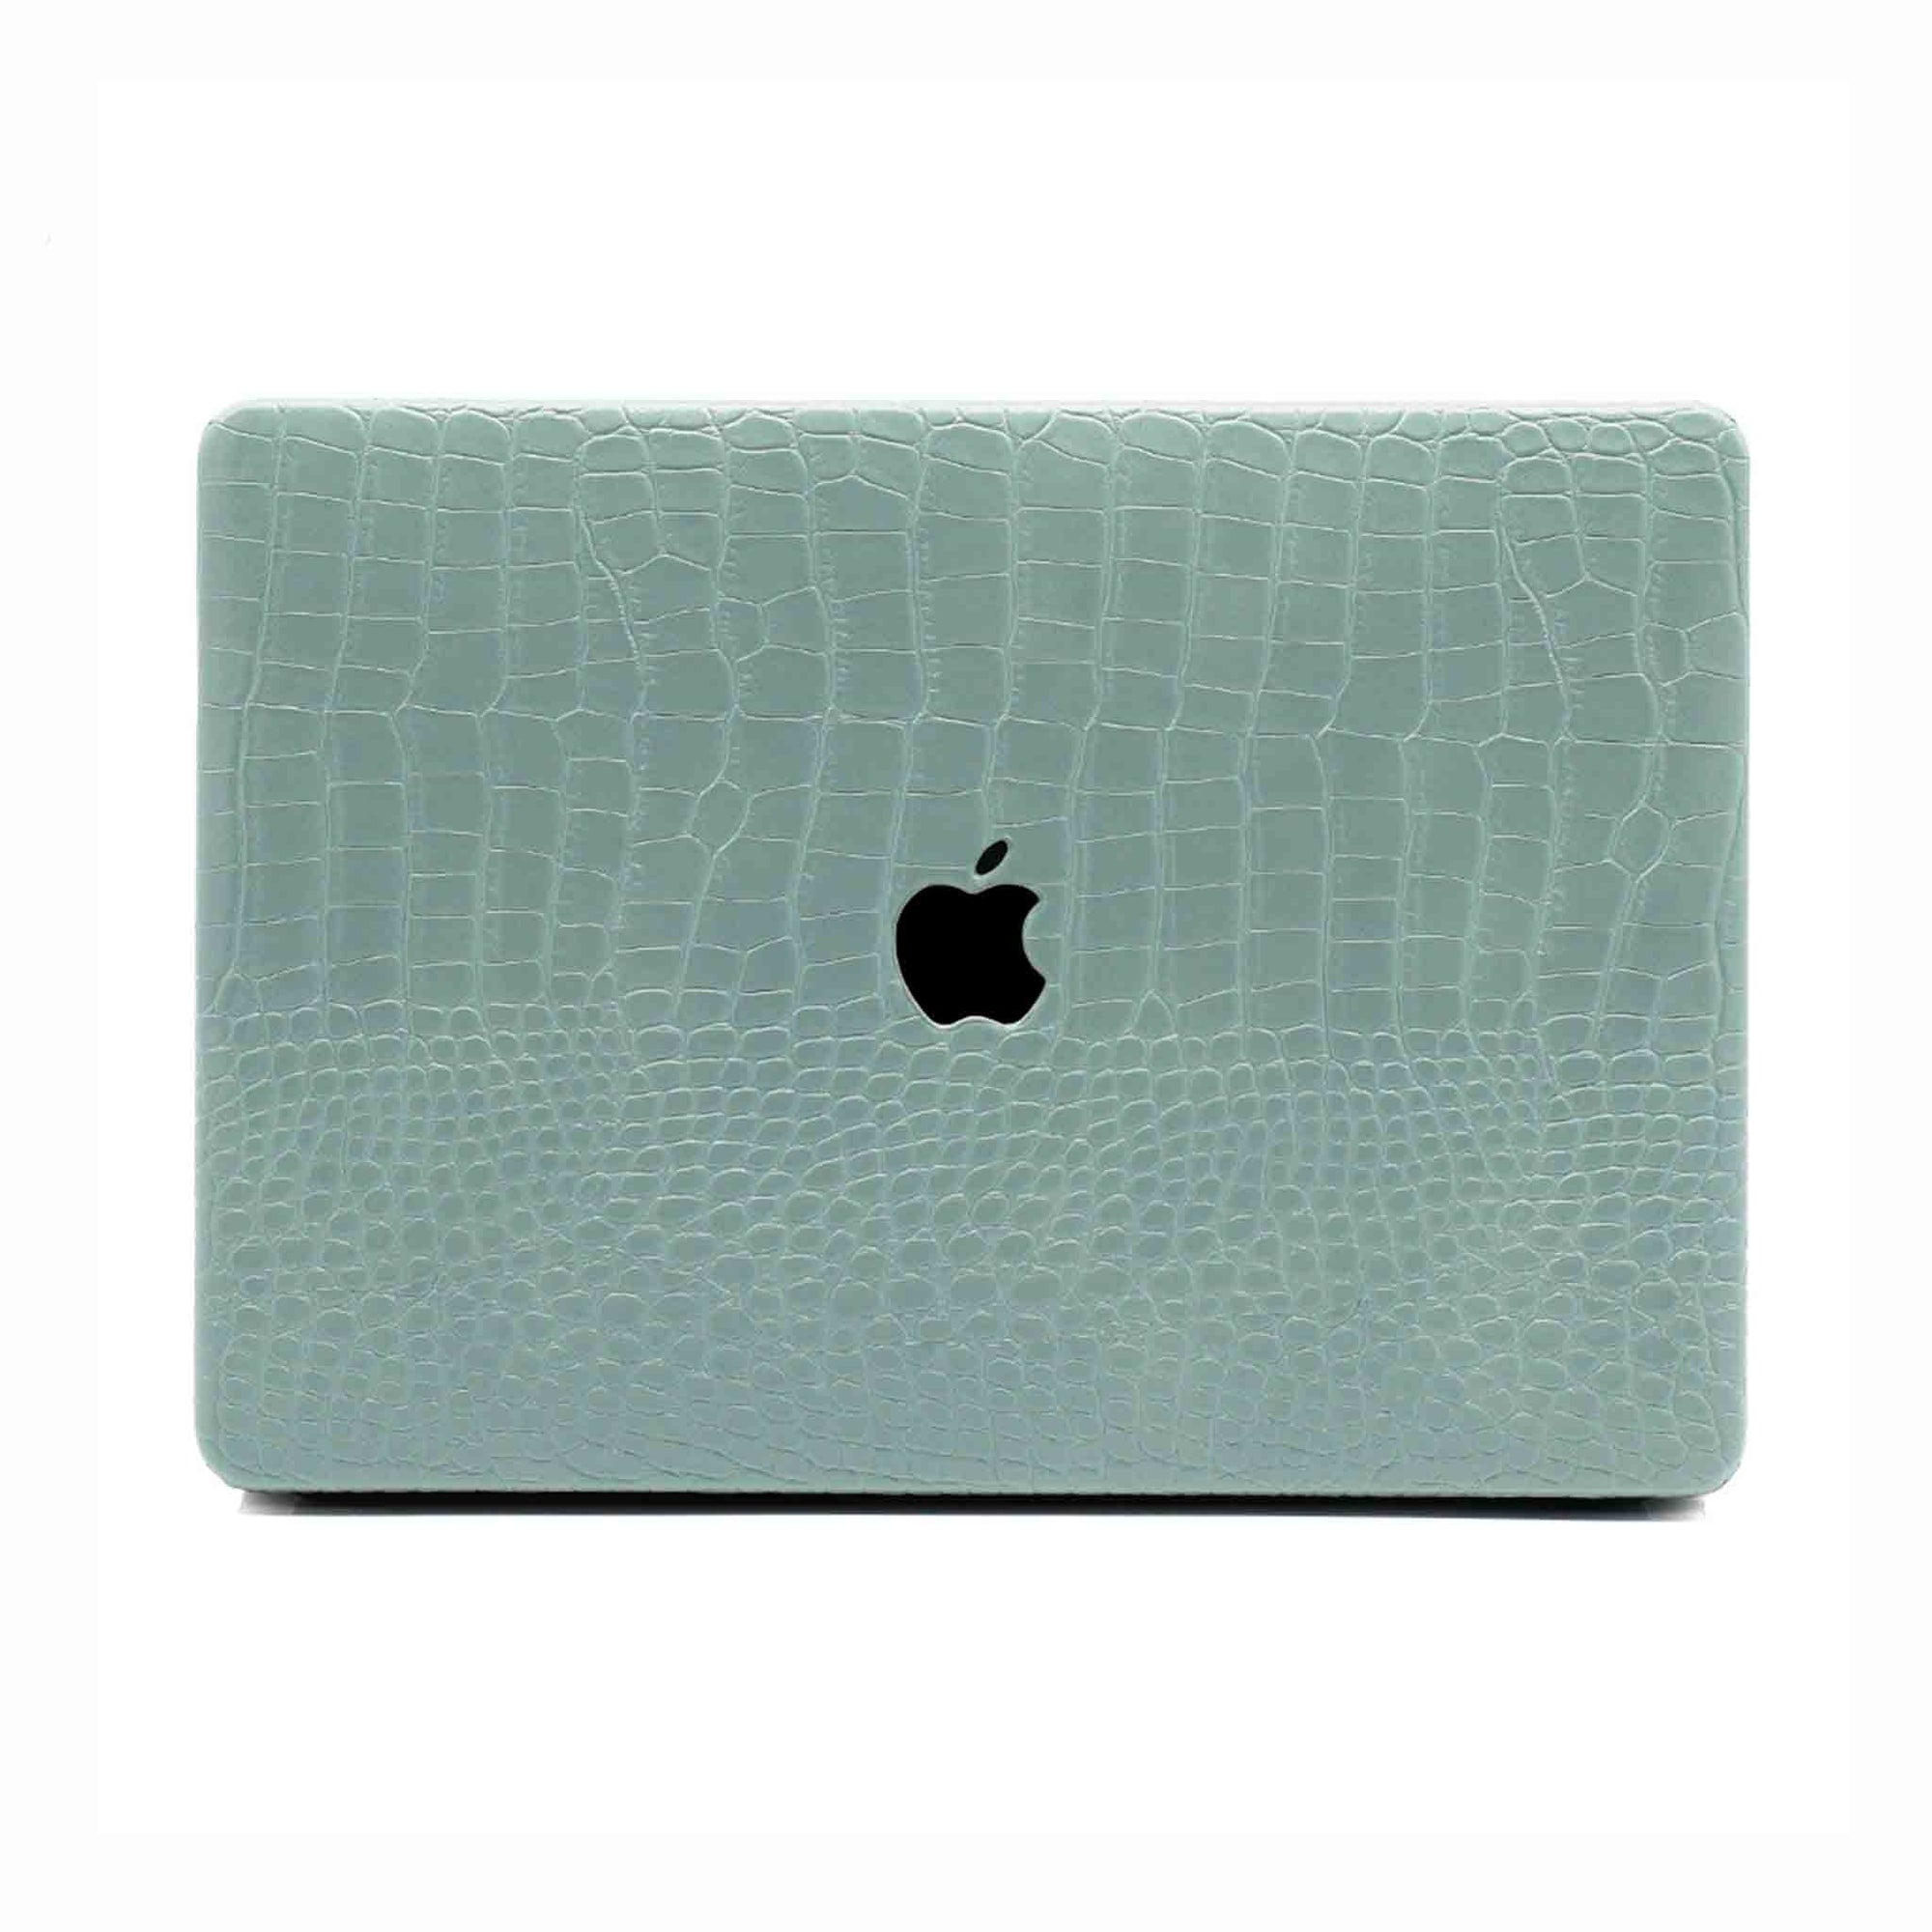 Crocodile MacBook Cases